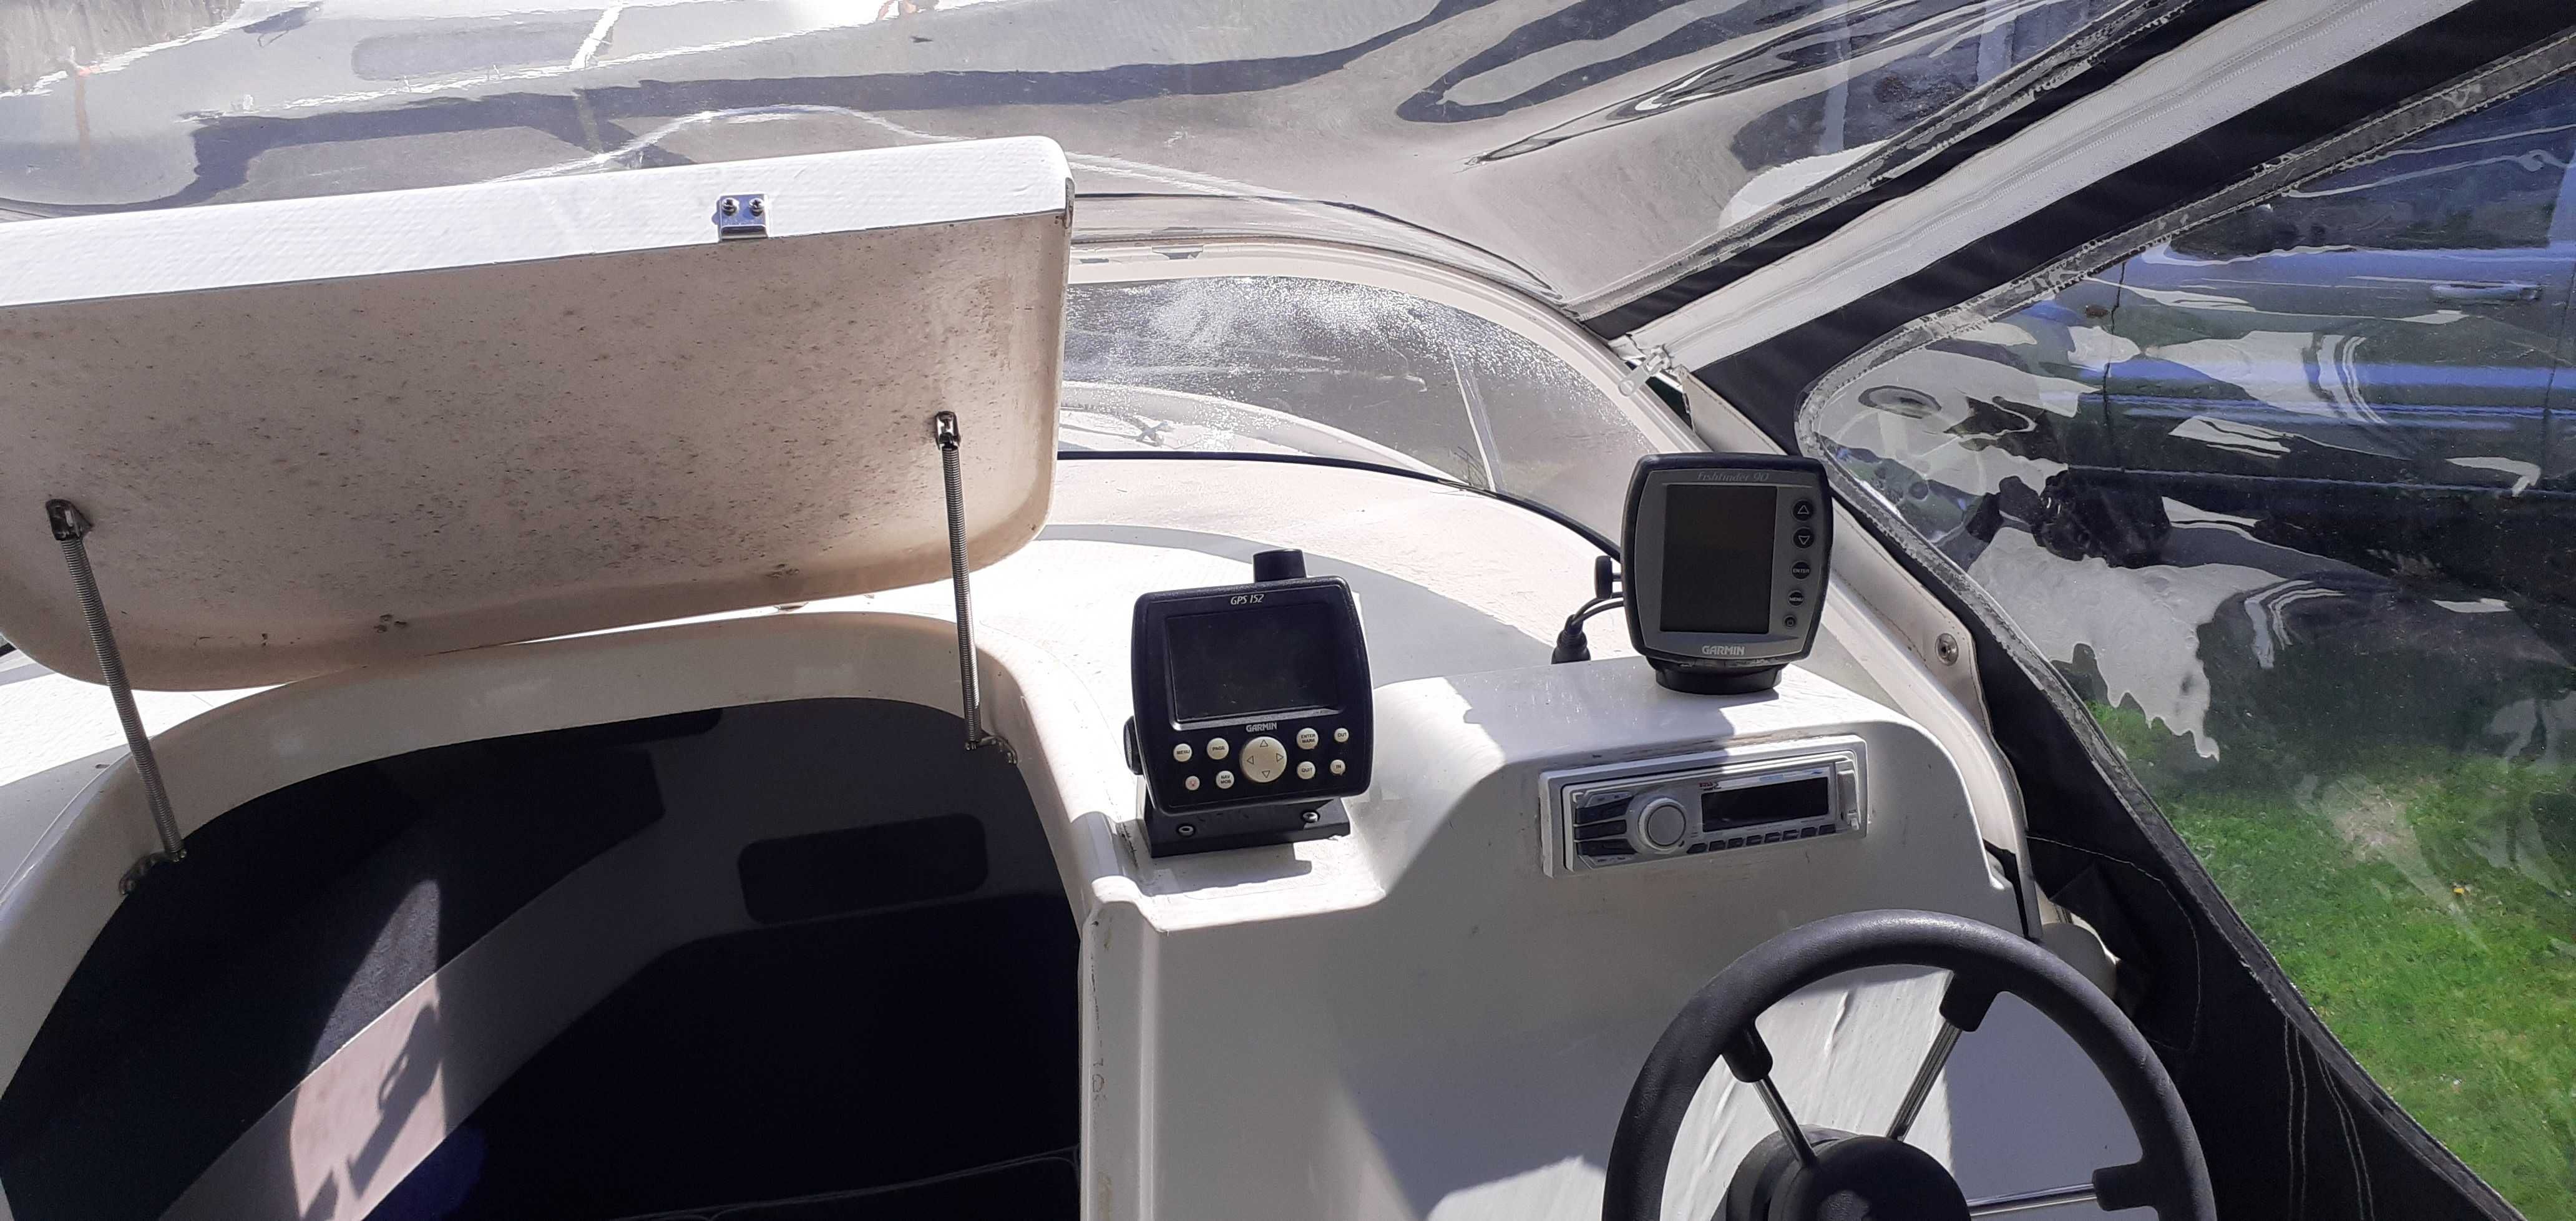 Łódż kabinowa 460  bez patentu spacerowo wędkarska  kpl.